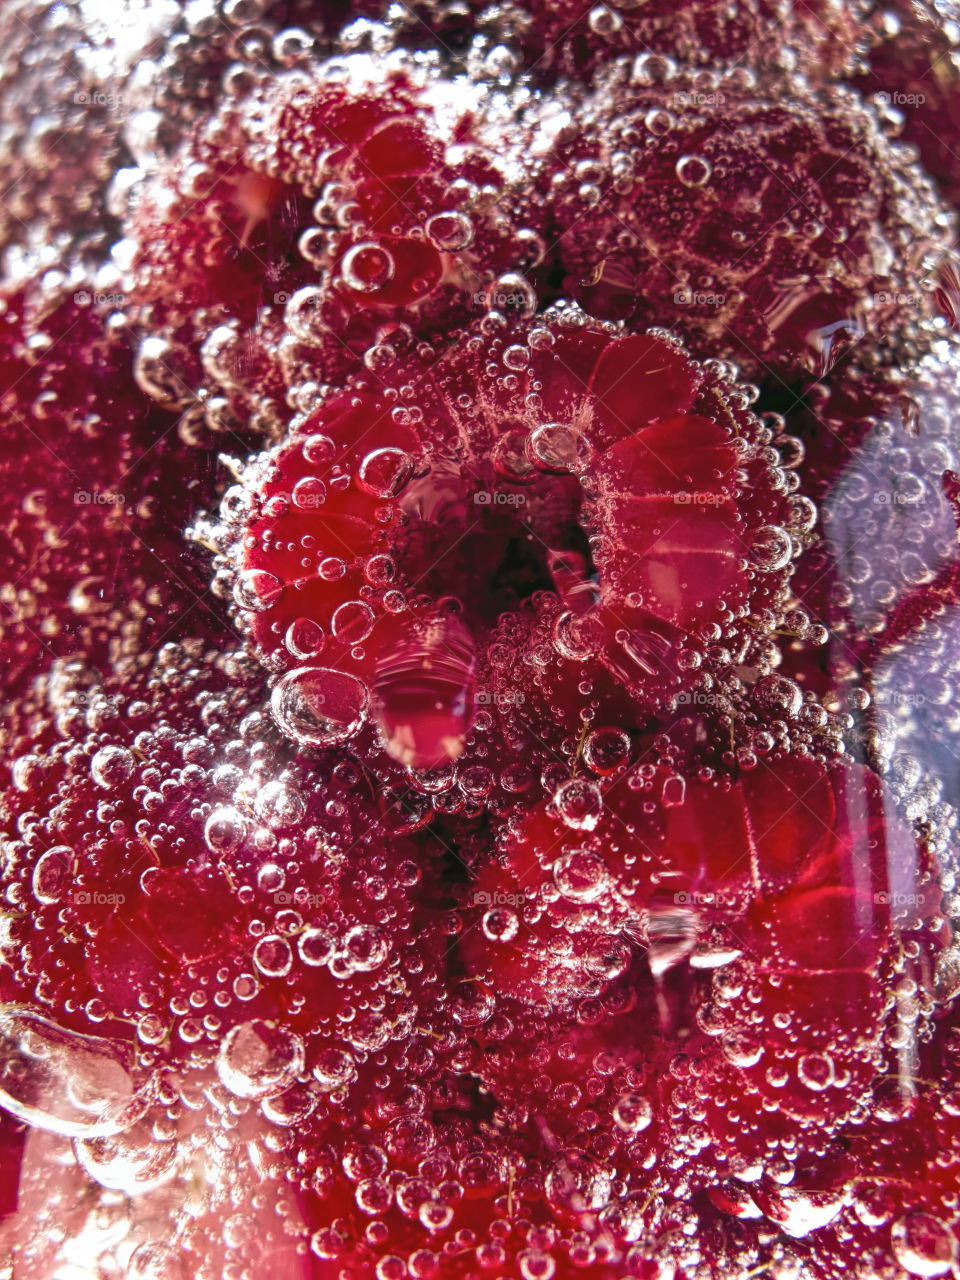 Raspberries in carbonated water closeup